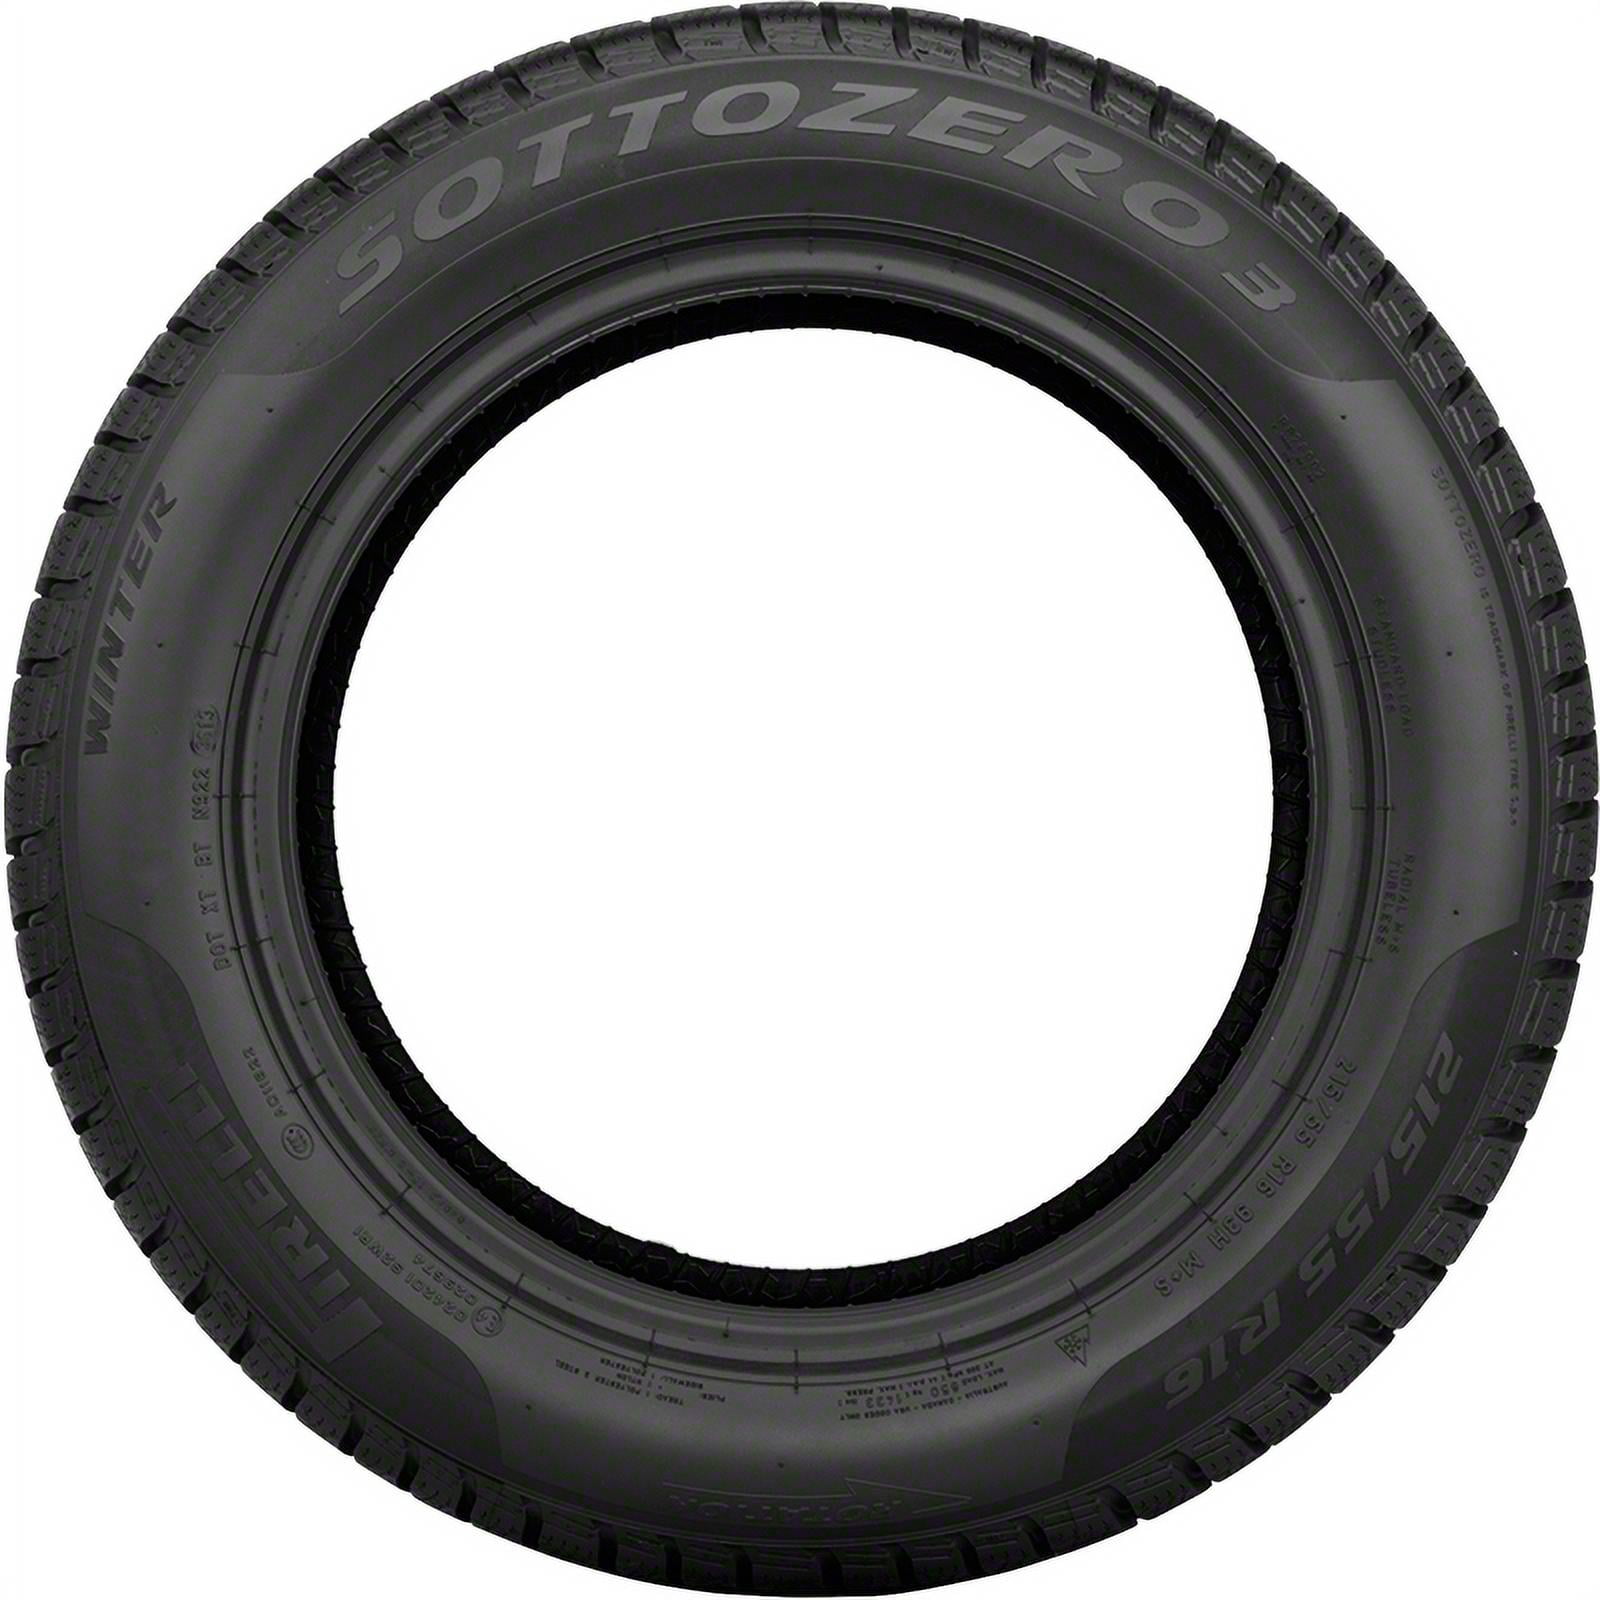 Pirelli Winter Sottozero 3 275/35-19 100 V Tire